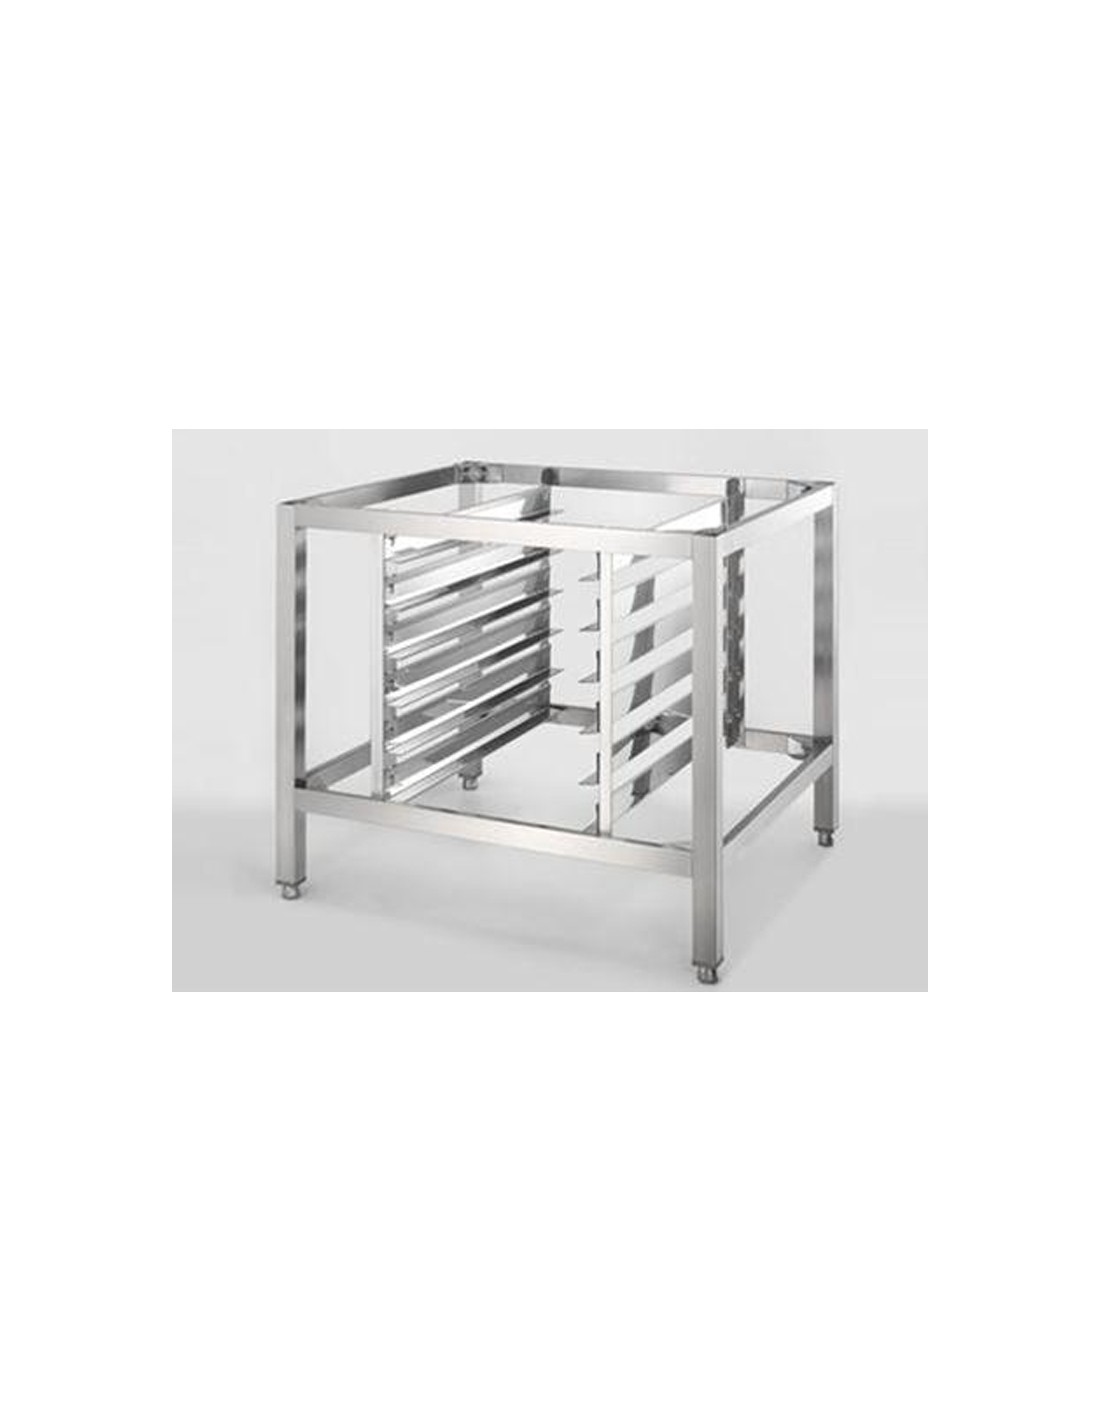 Stainless steel table + racks GN 2/1 h 68 cm - Capacity teglie n. 5